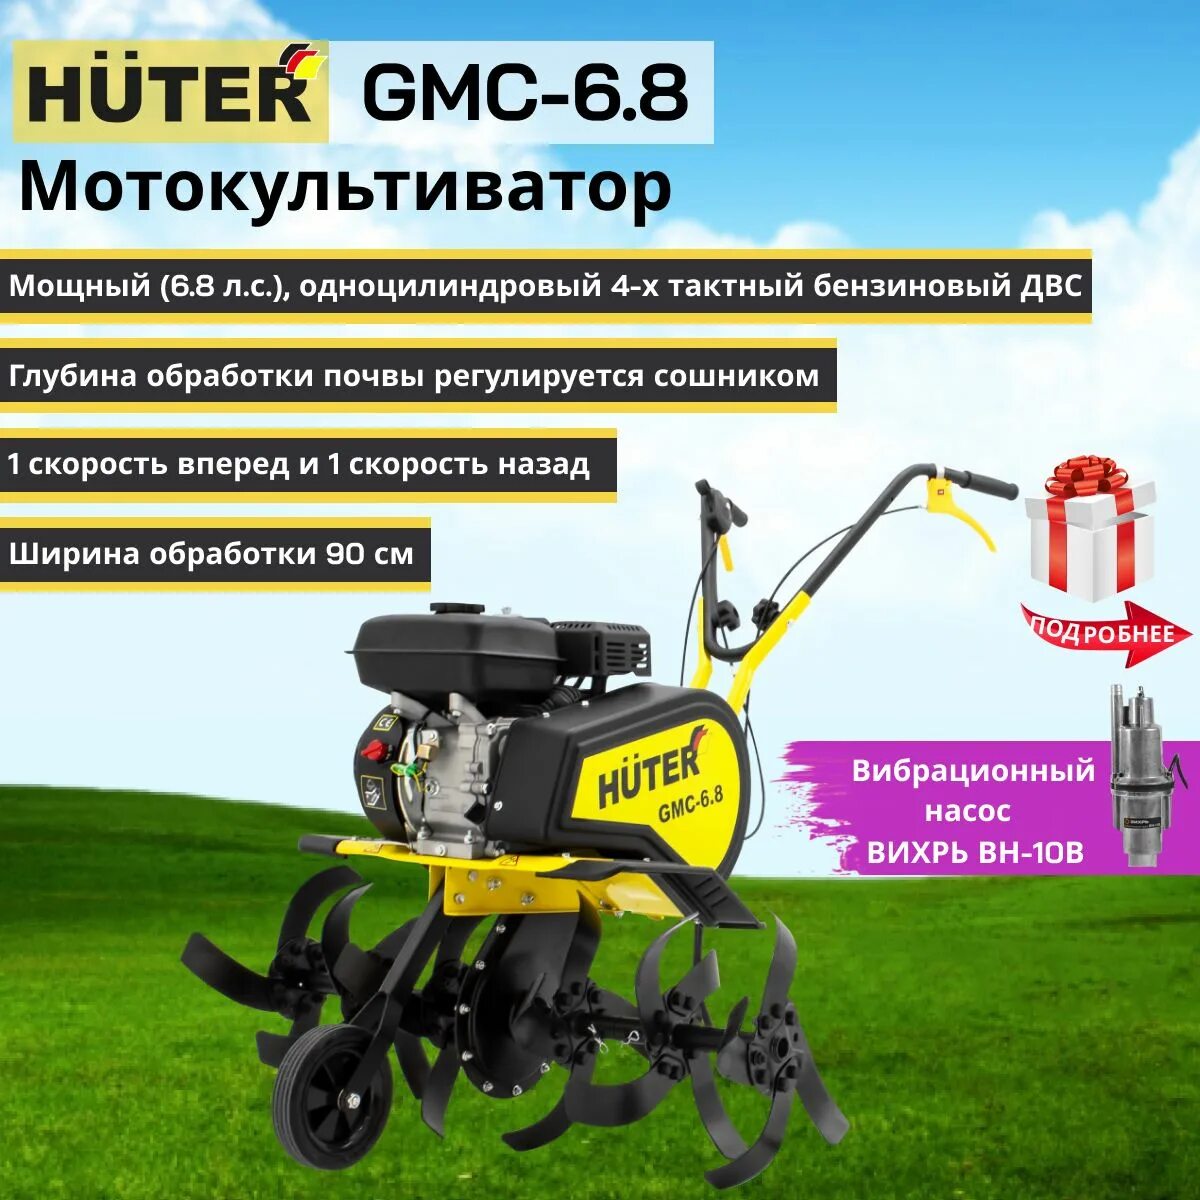 5 huter отзывы. Мотокультиватор GMC-6.5 Huter 70/5/6. Мотокультиватор Huter GMC-6.8 70/5/21. Бензиновый культиватор Huter GMC-6.5. Мотокультиватор Huter GMC-1.8.